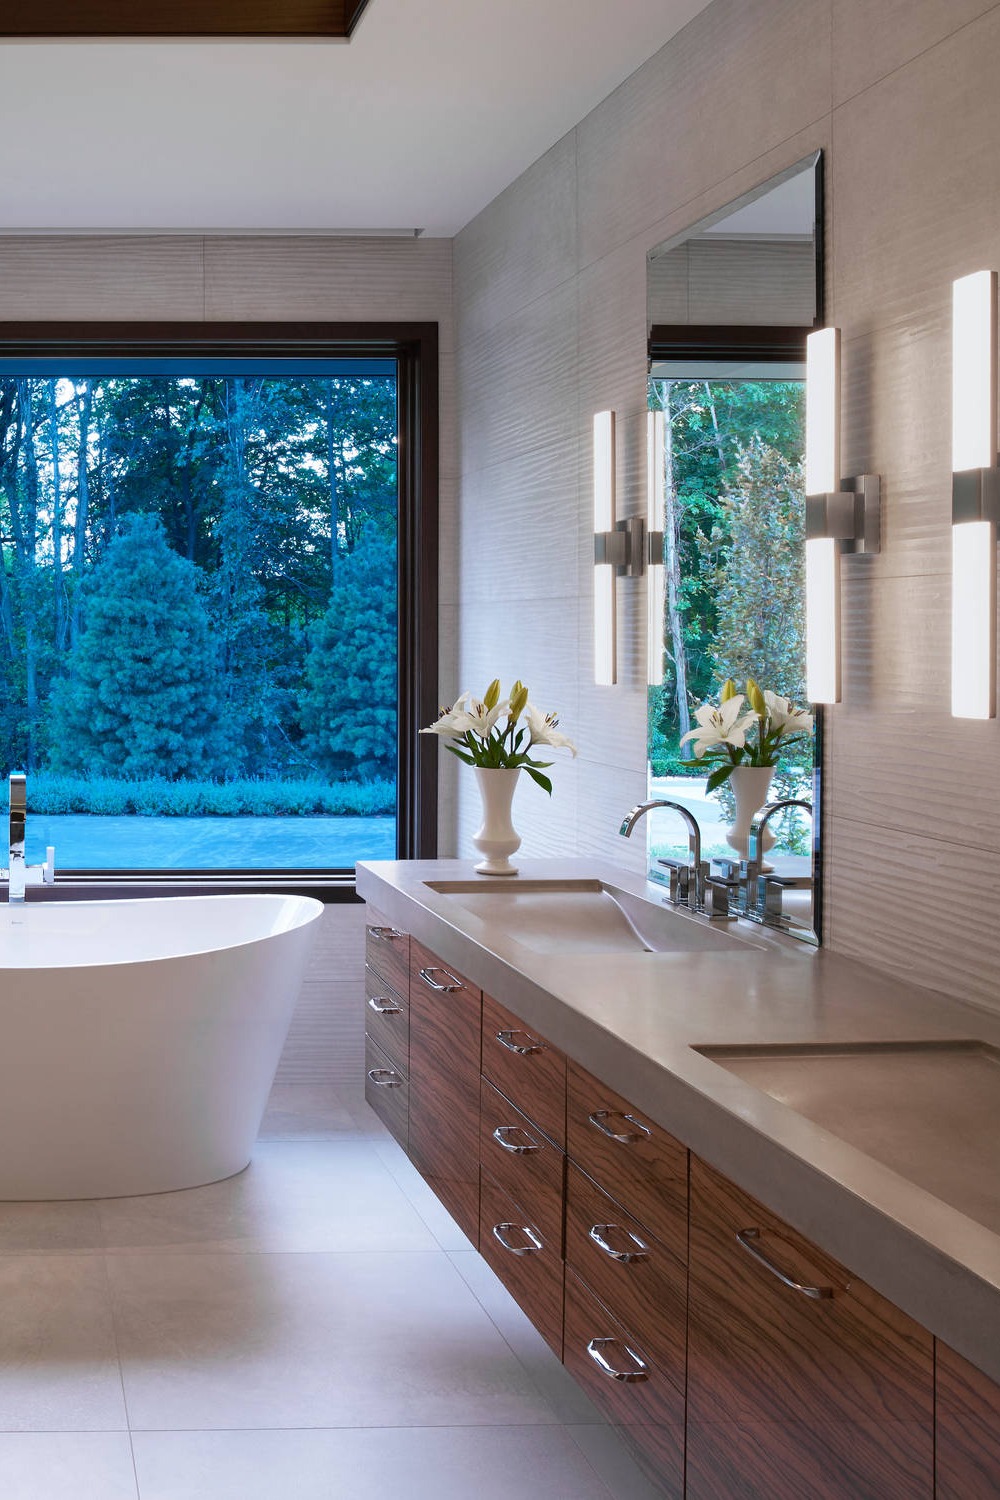 Modern Ideas Tile Sink Tiles Bathroom Backsplash Grey Quartz Countertops Large Format Porcelain Floor Bathtub Mirror